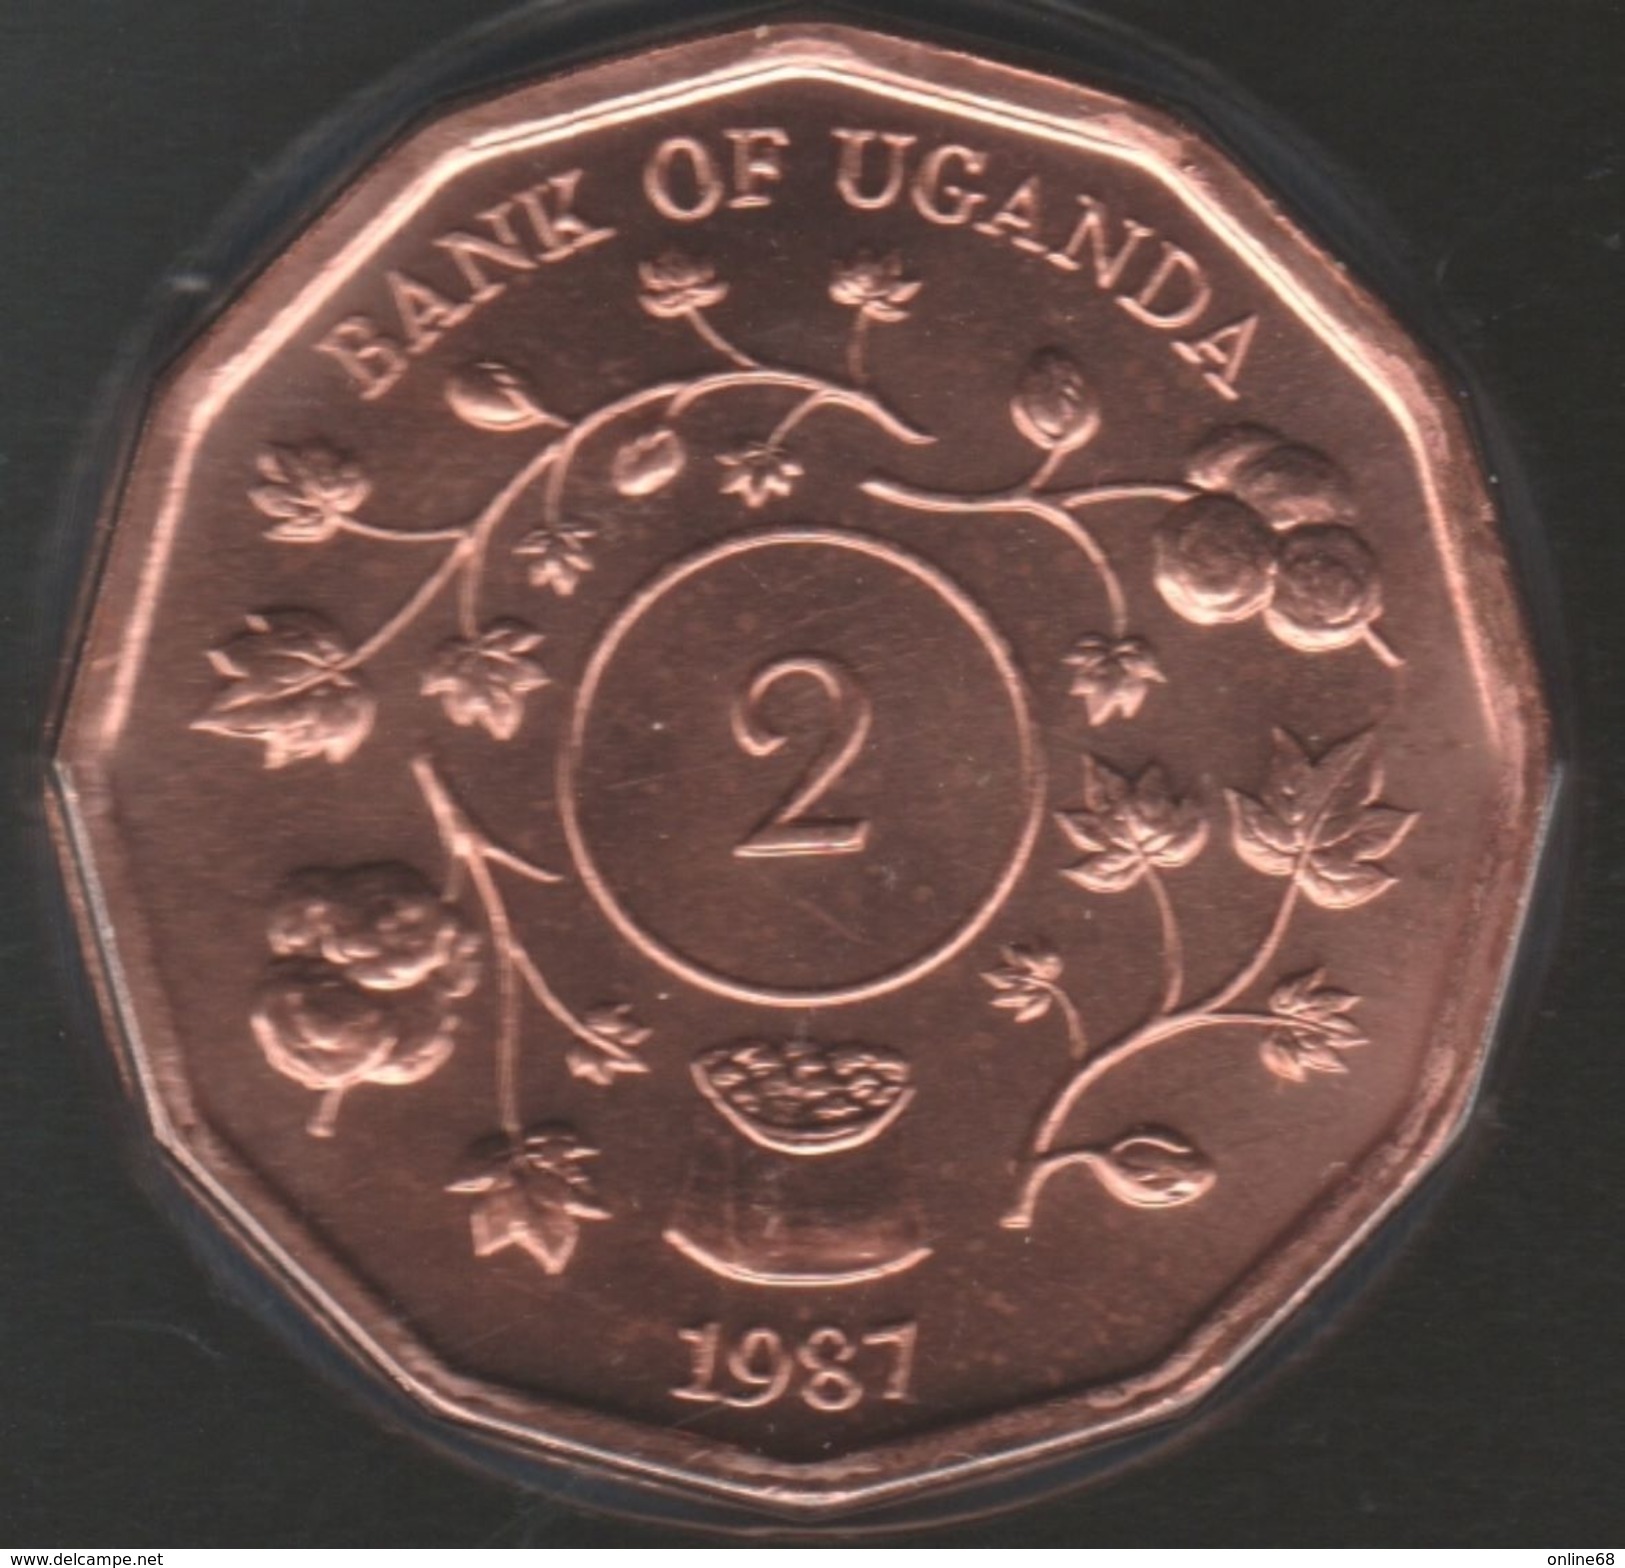 UGANDA 2 SHILLINGS 1987 KM# 28 Dodecagonal 12-sided COIN - Ouganda